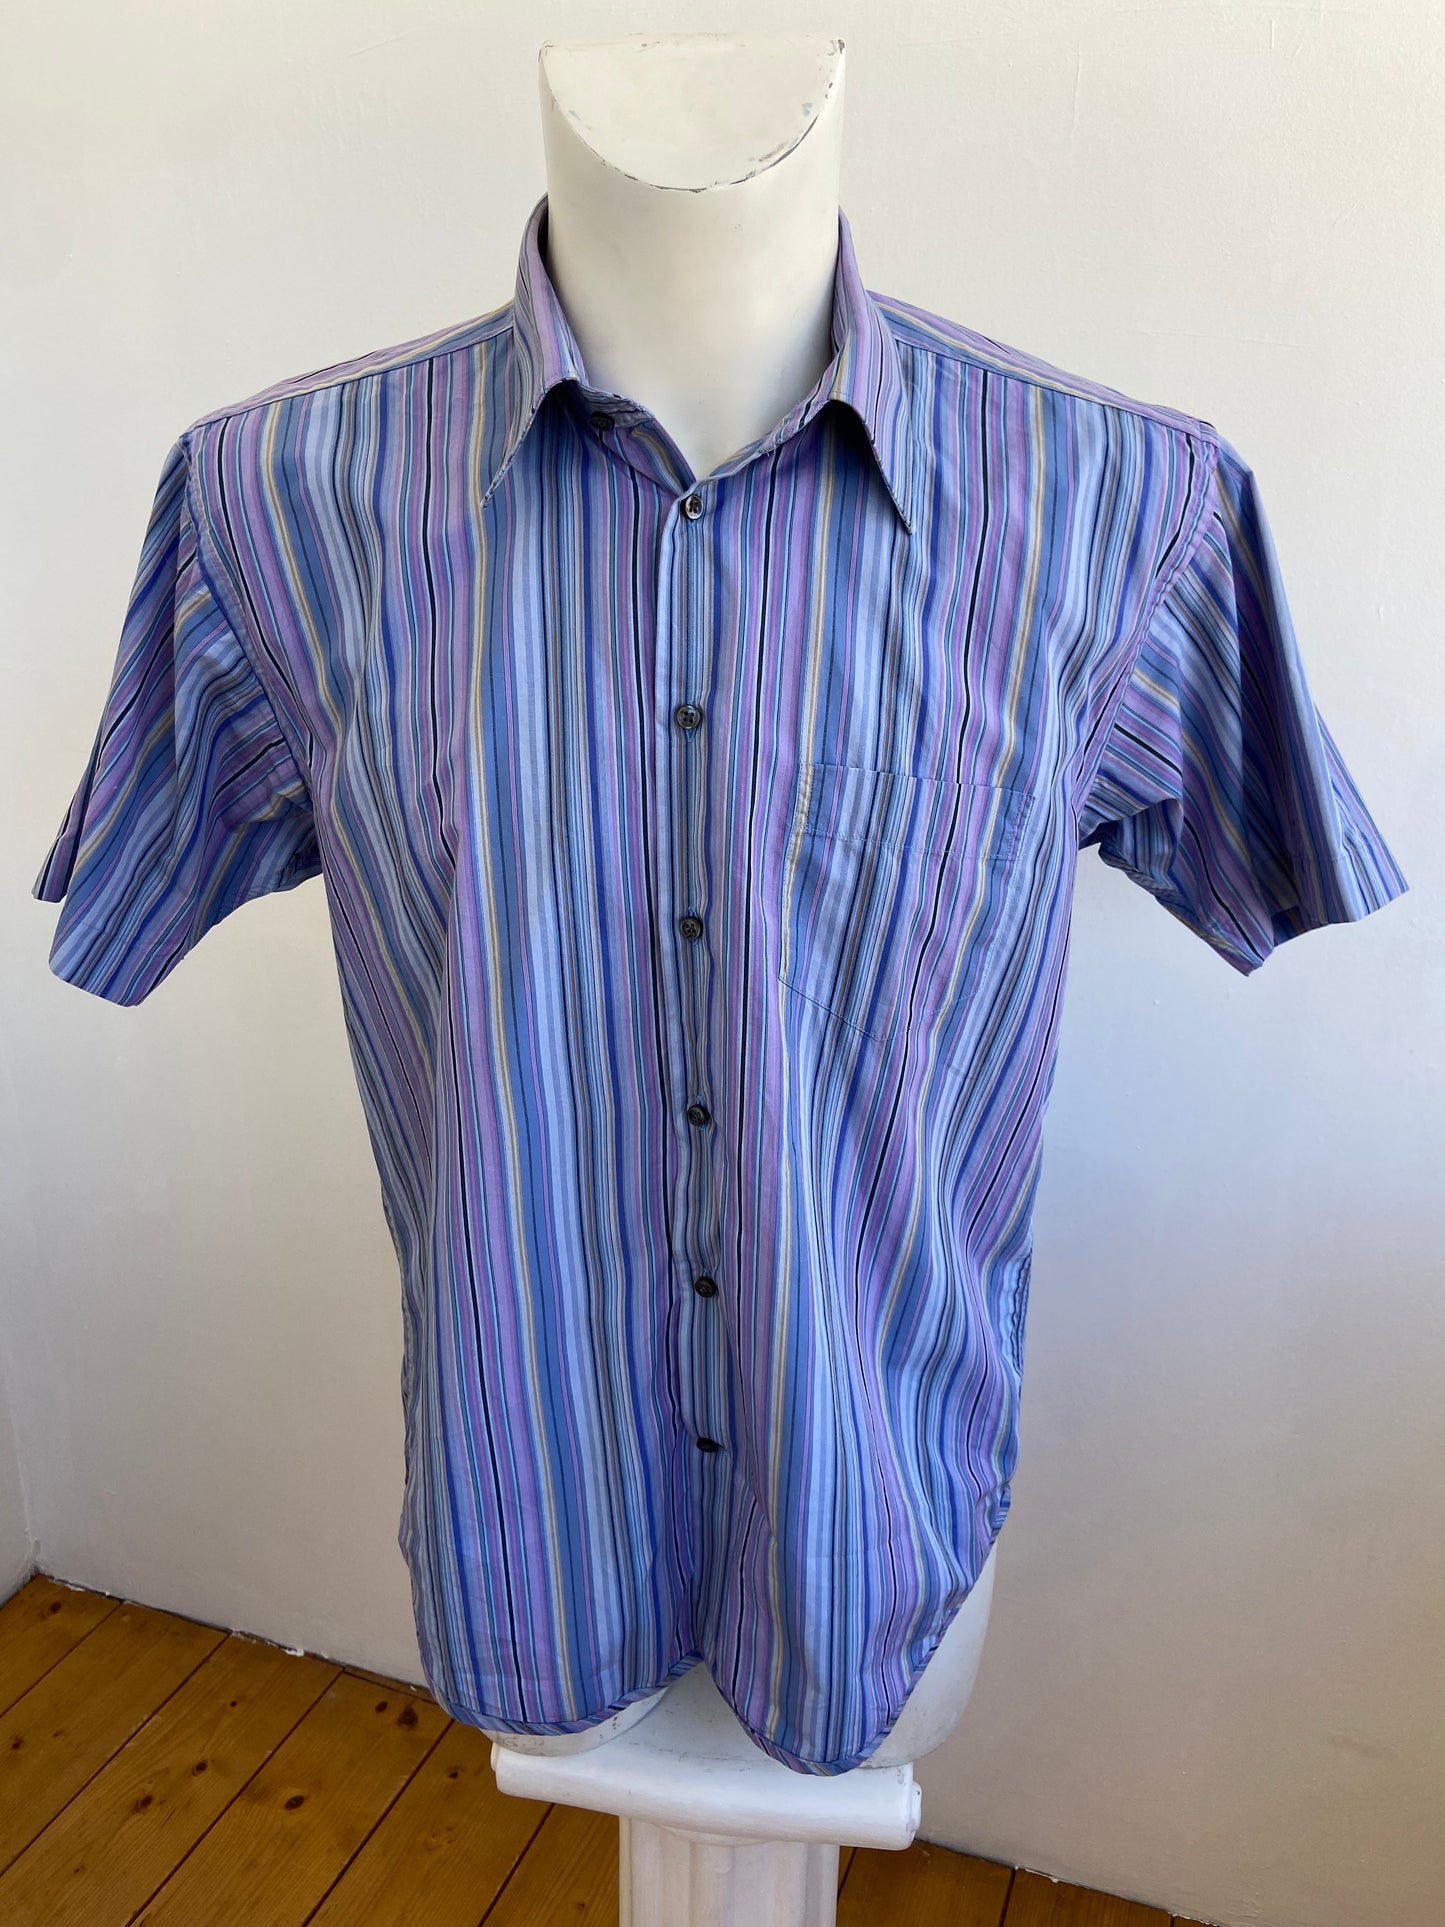 Lilac stripes shirt